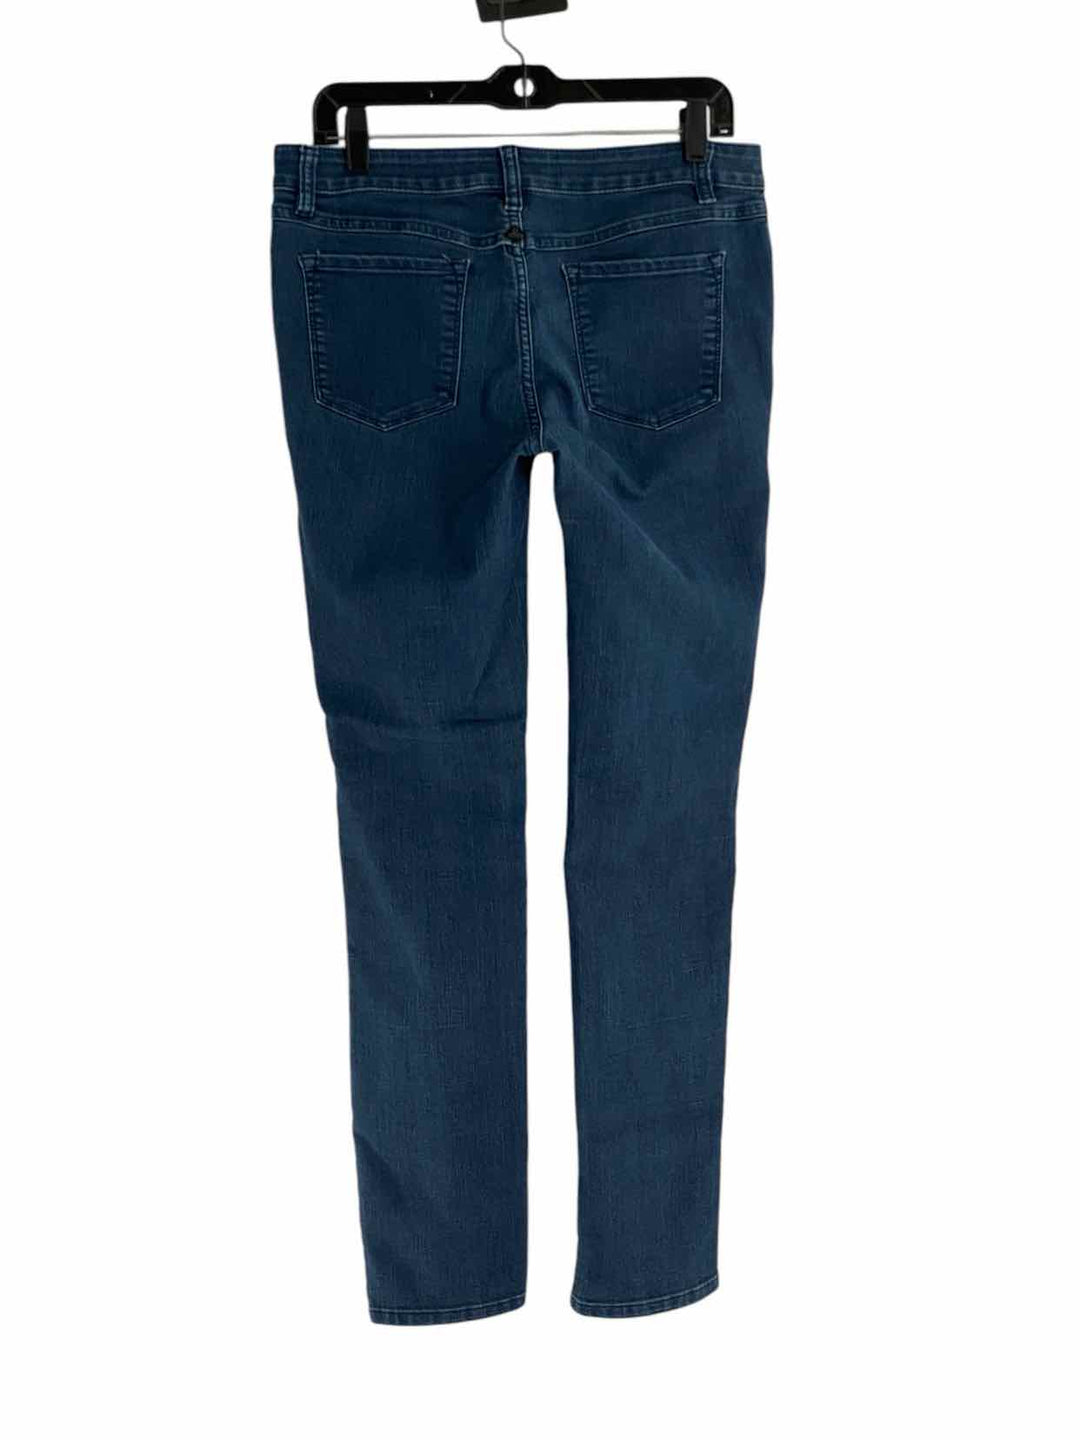 PrAna Size 8/29 Jeans